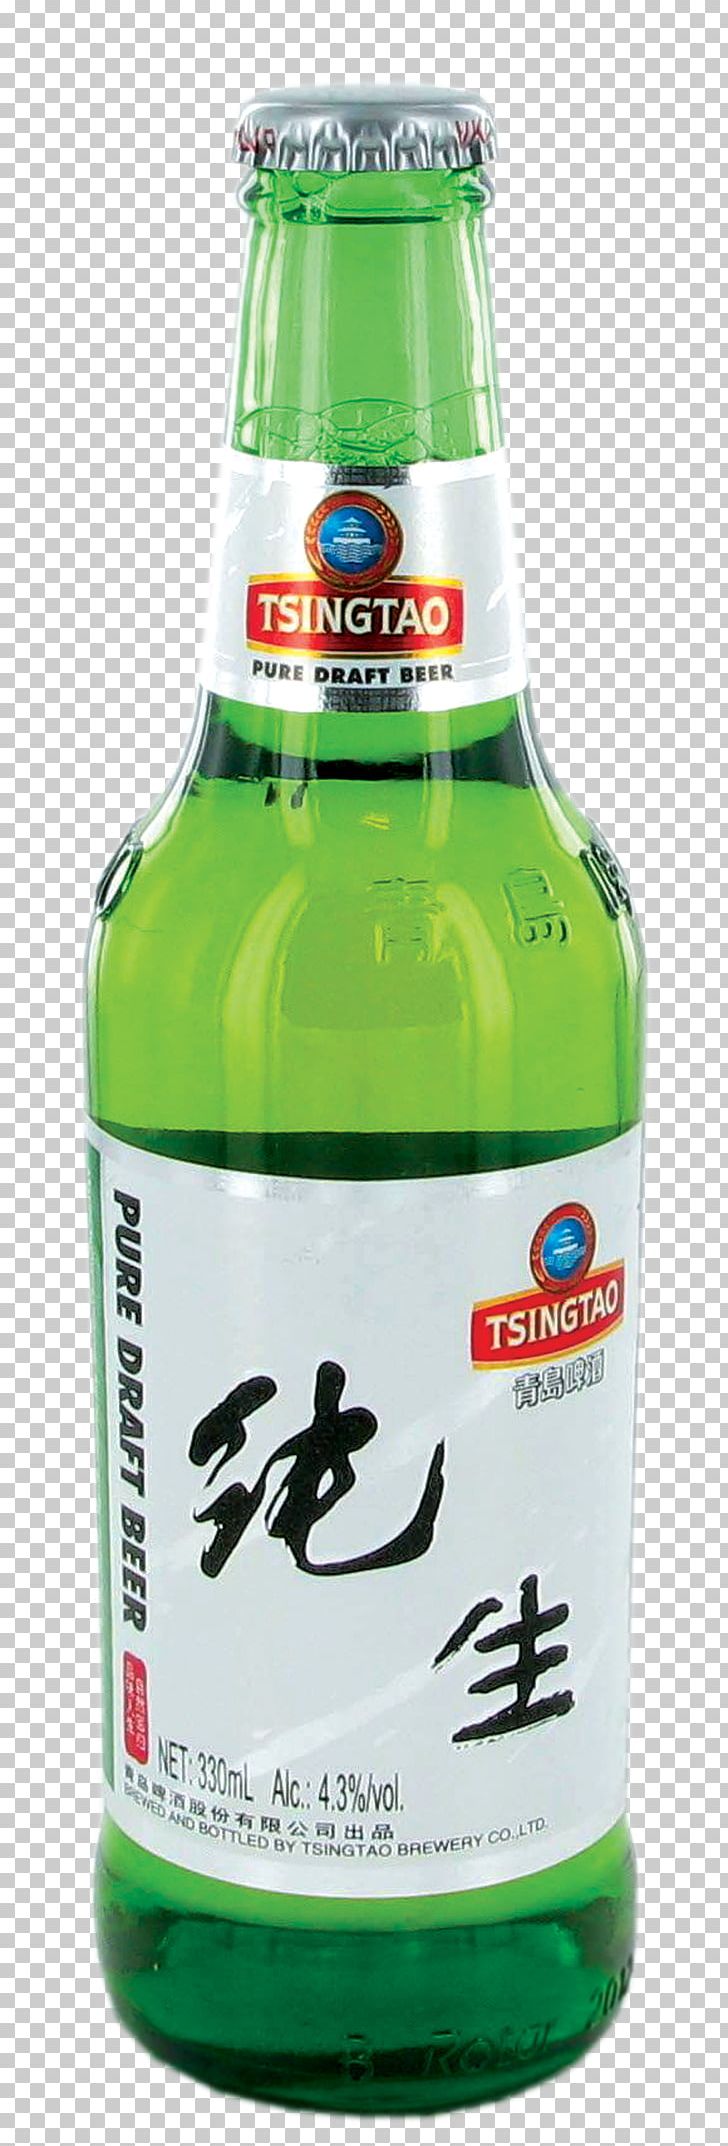 Beer Bottle Tsingtao Brewery Glass Bottle PNG, Clipart, Beer, Beer Bottle, Bottle, Brewery, Drink Free PNG Download